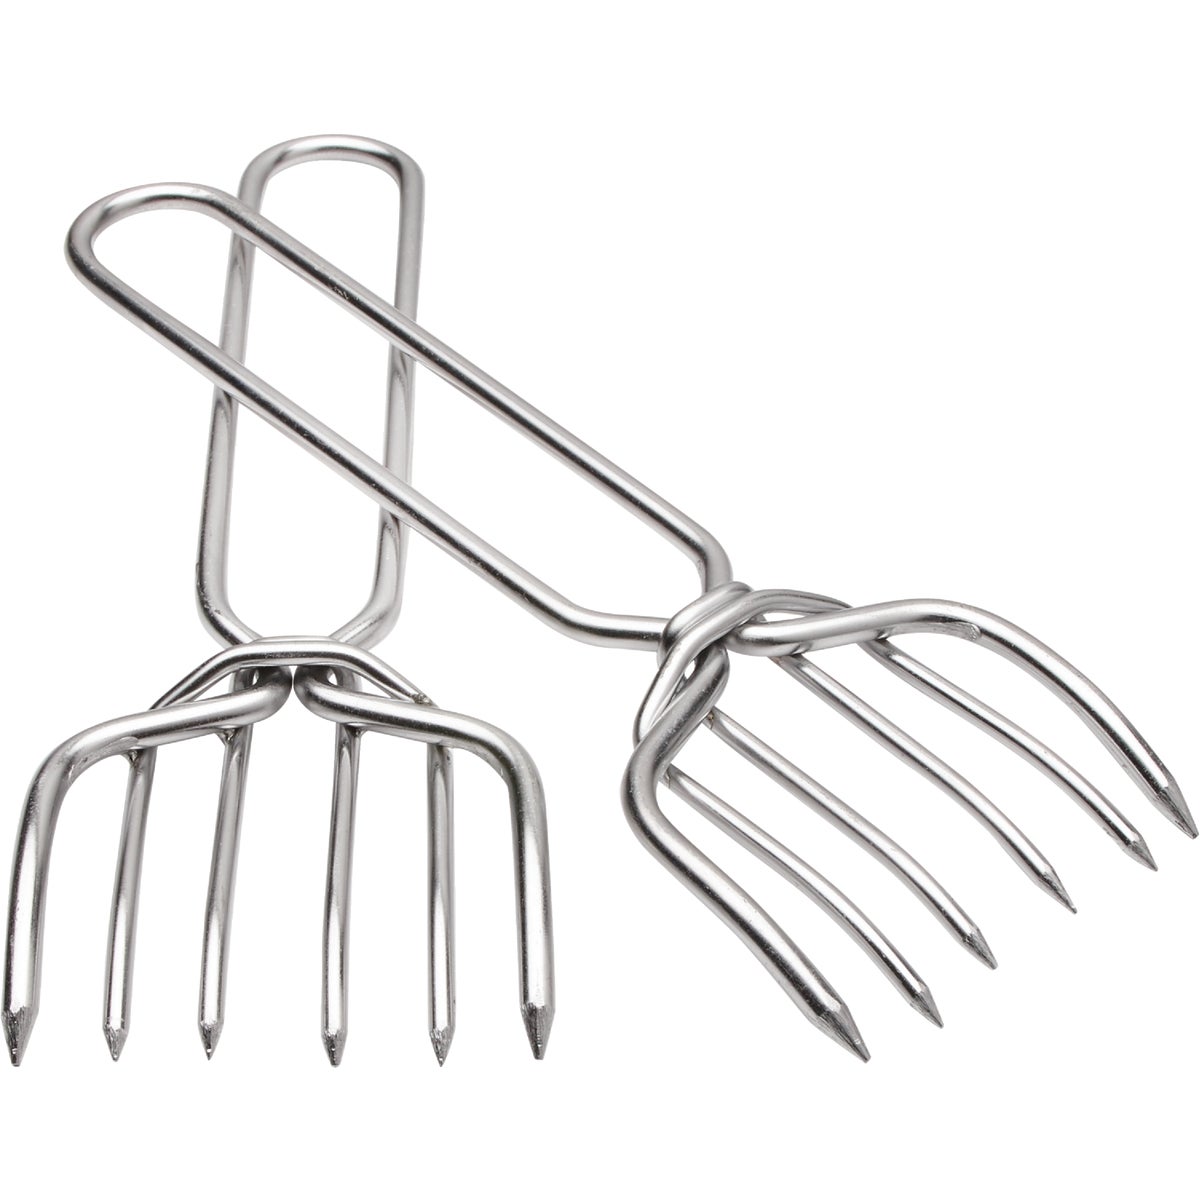 Item 800830, Meat shredding fork. Designed to pull chicken and pork.